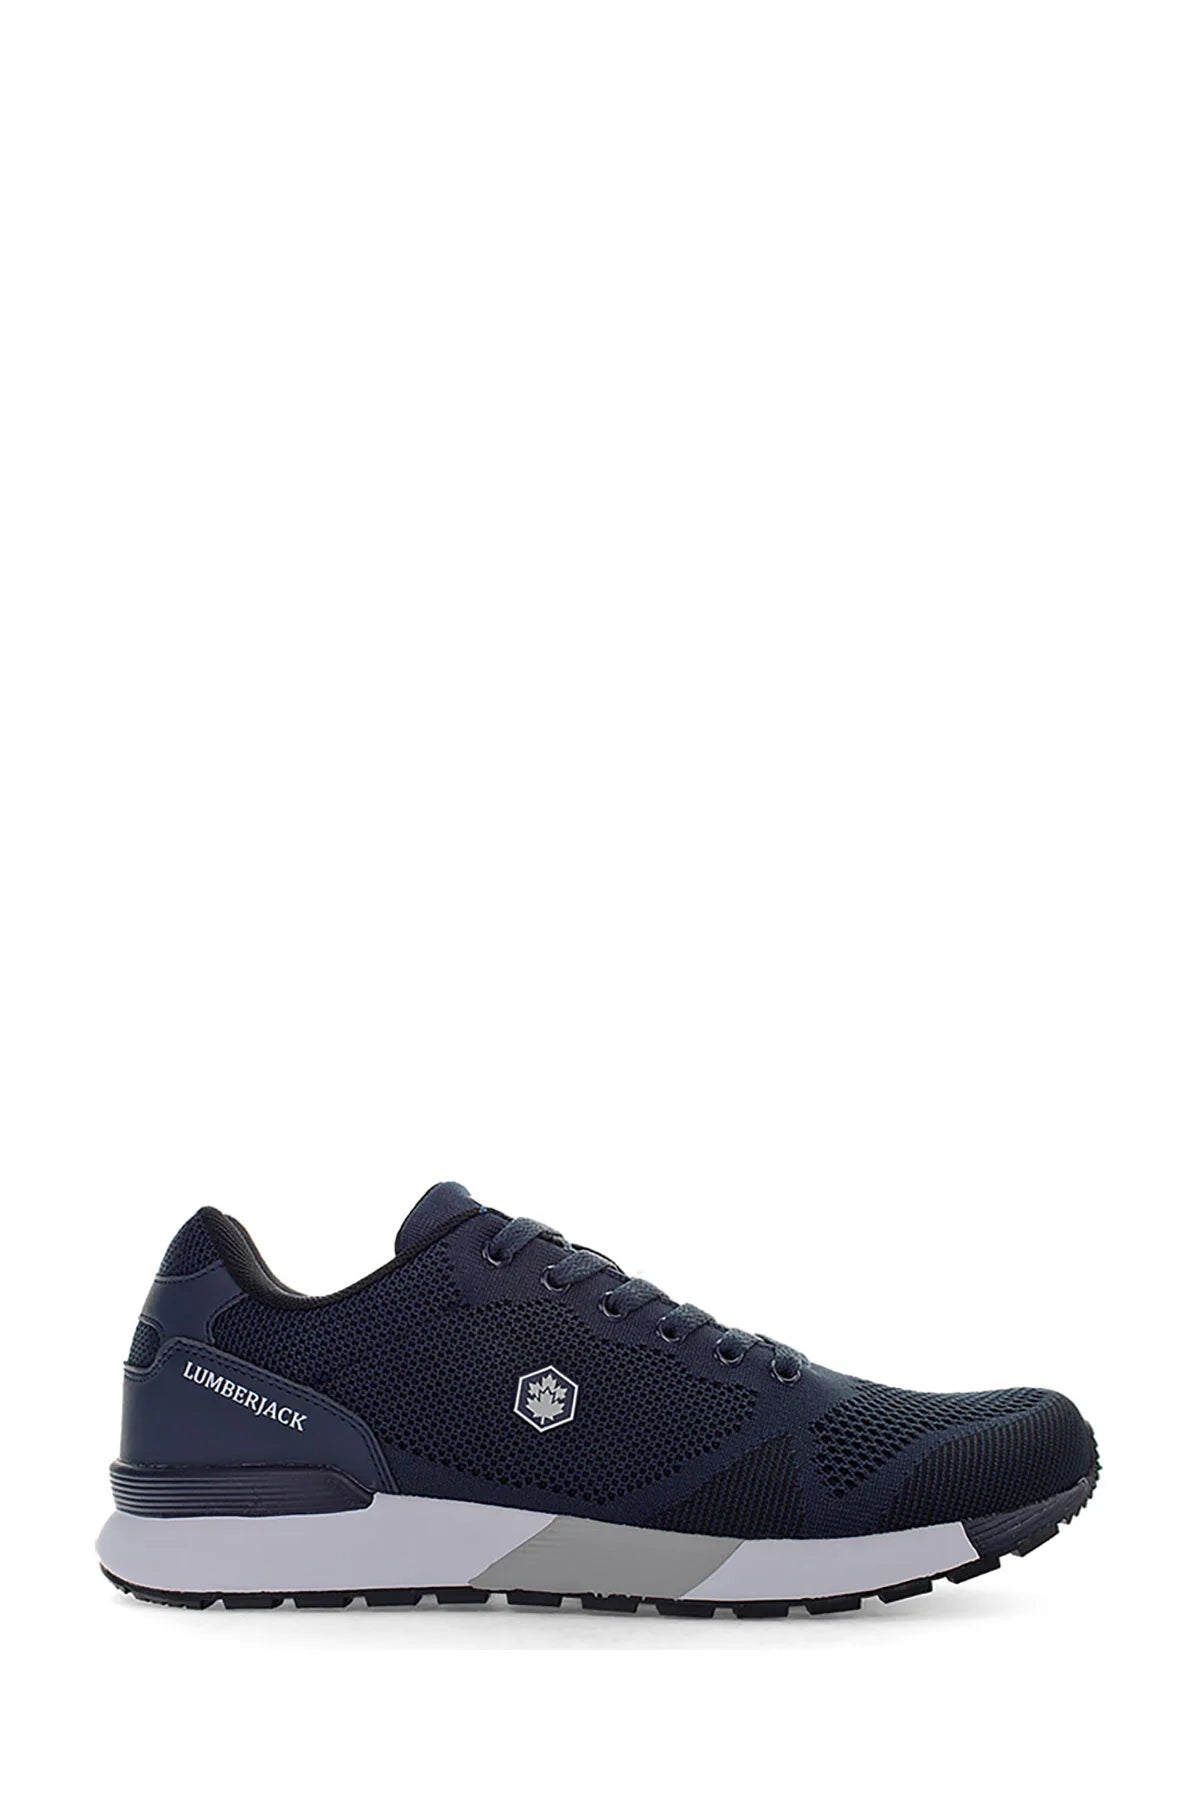 Lumberjack SM62111-003 Vendor sneakers uomo navy blue/grey